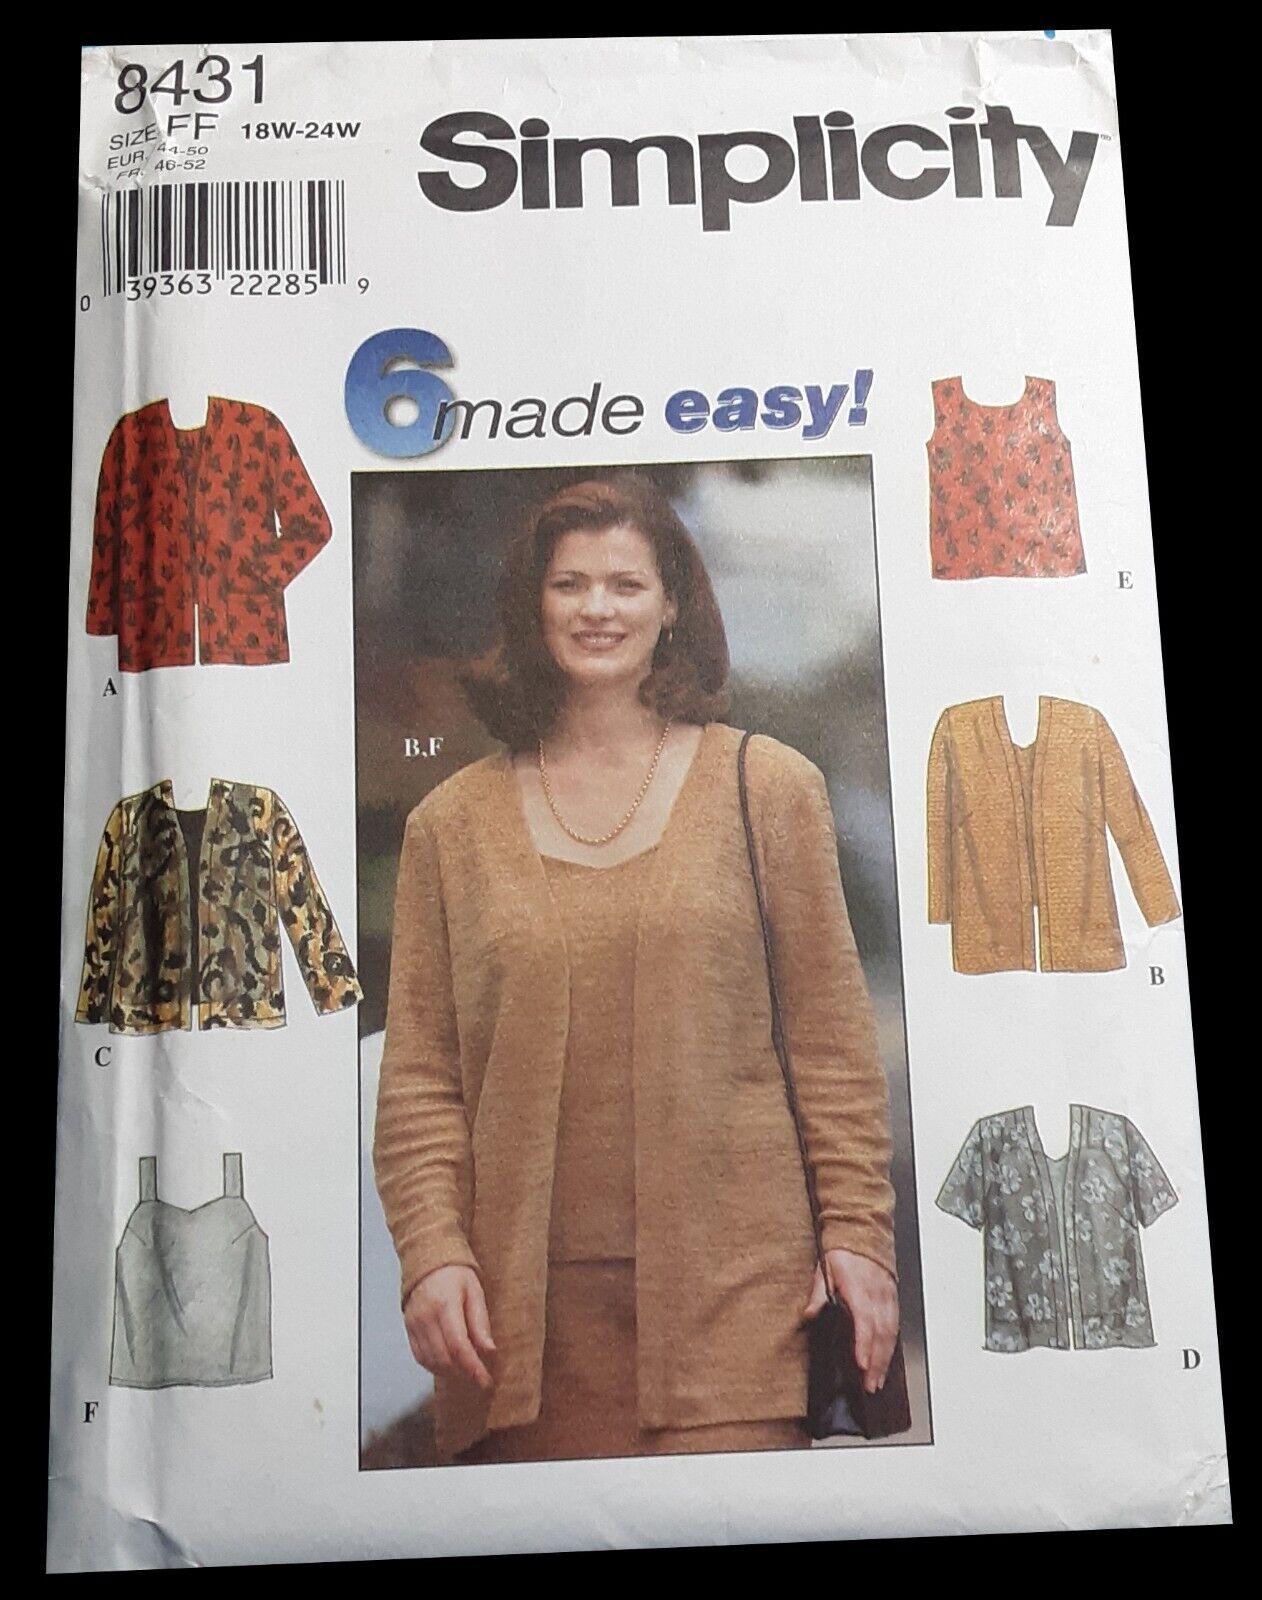 Vintage Simplicity #8431: Cardigan, Tank Top, & Camisole (1998) Size 18W-24W